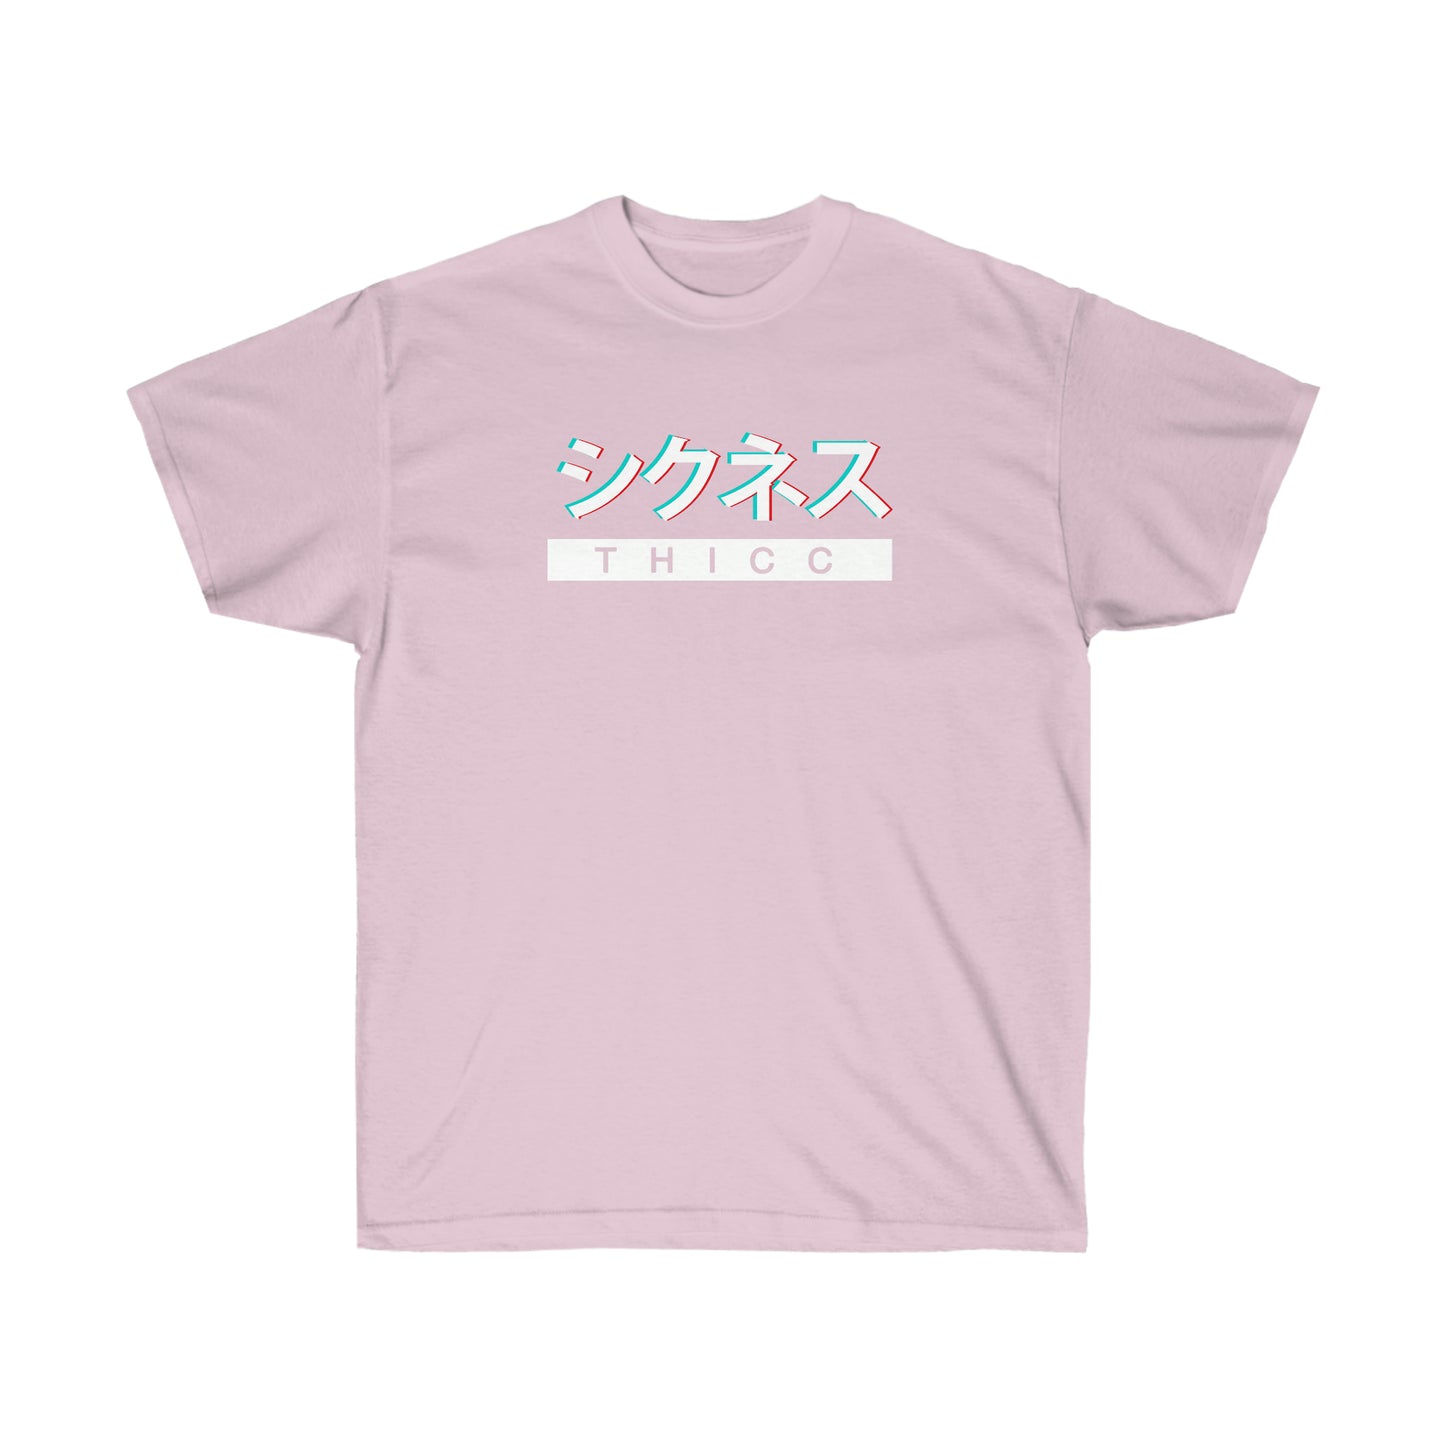 THICC t-Shirt Anime shirt Glitch Vaporwave Aesthetic Japanese Streetwear Tumblr Tee Grunge T-shirt Aesthetic tee Minimal Simple